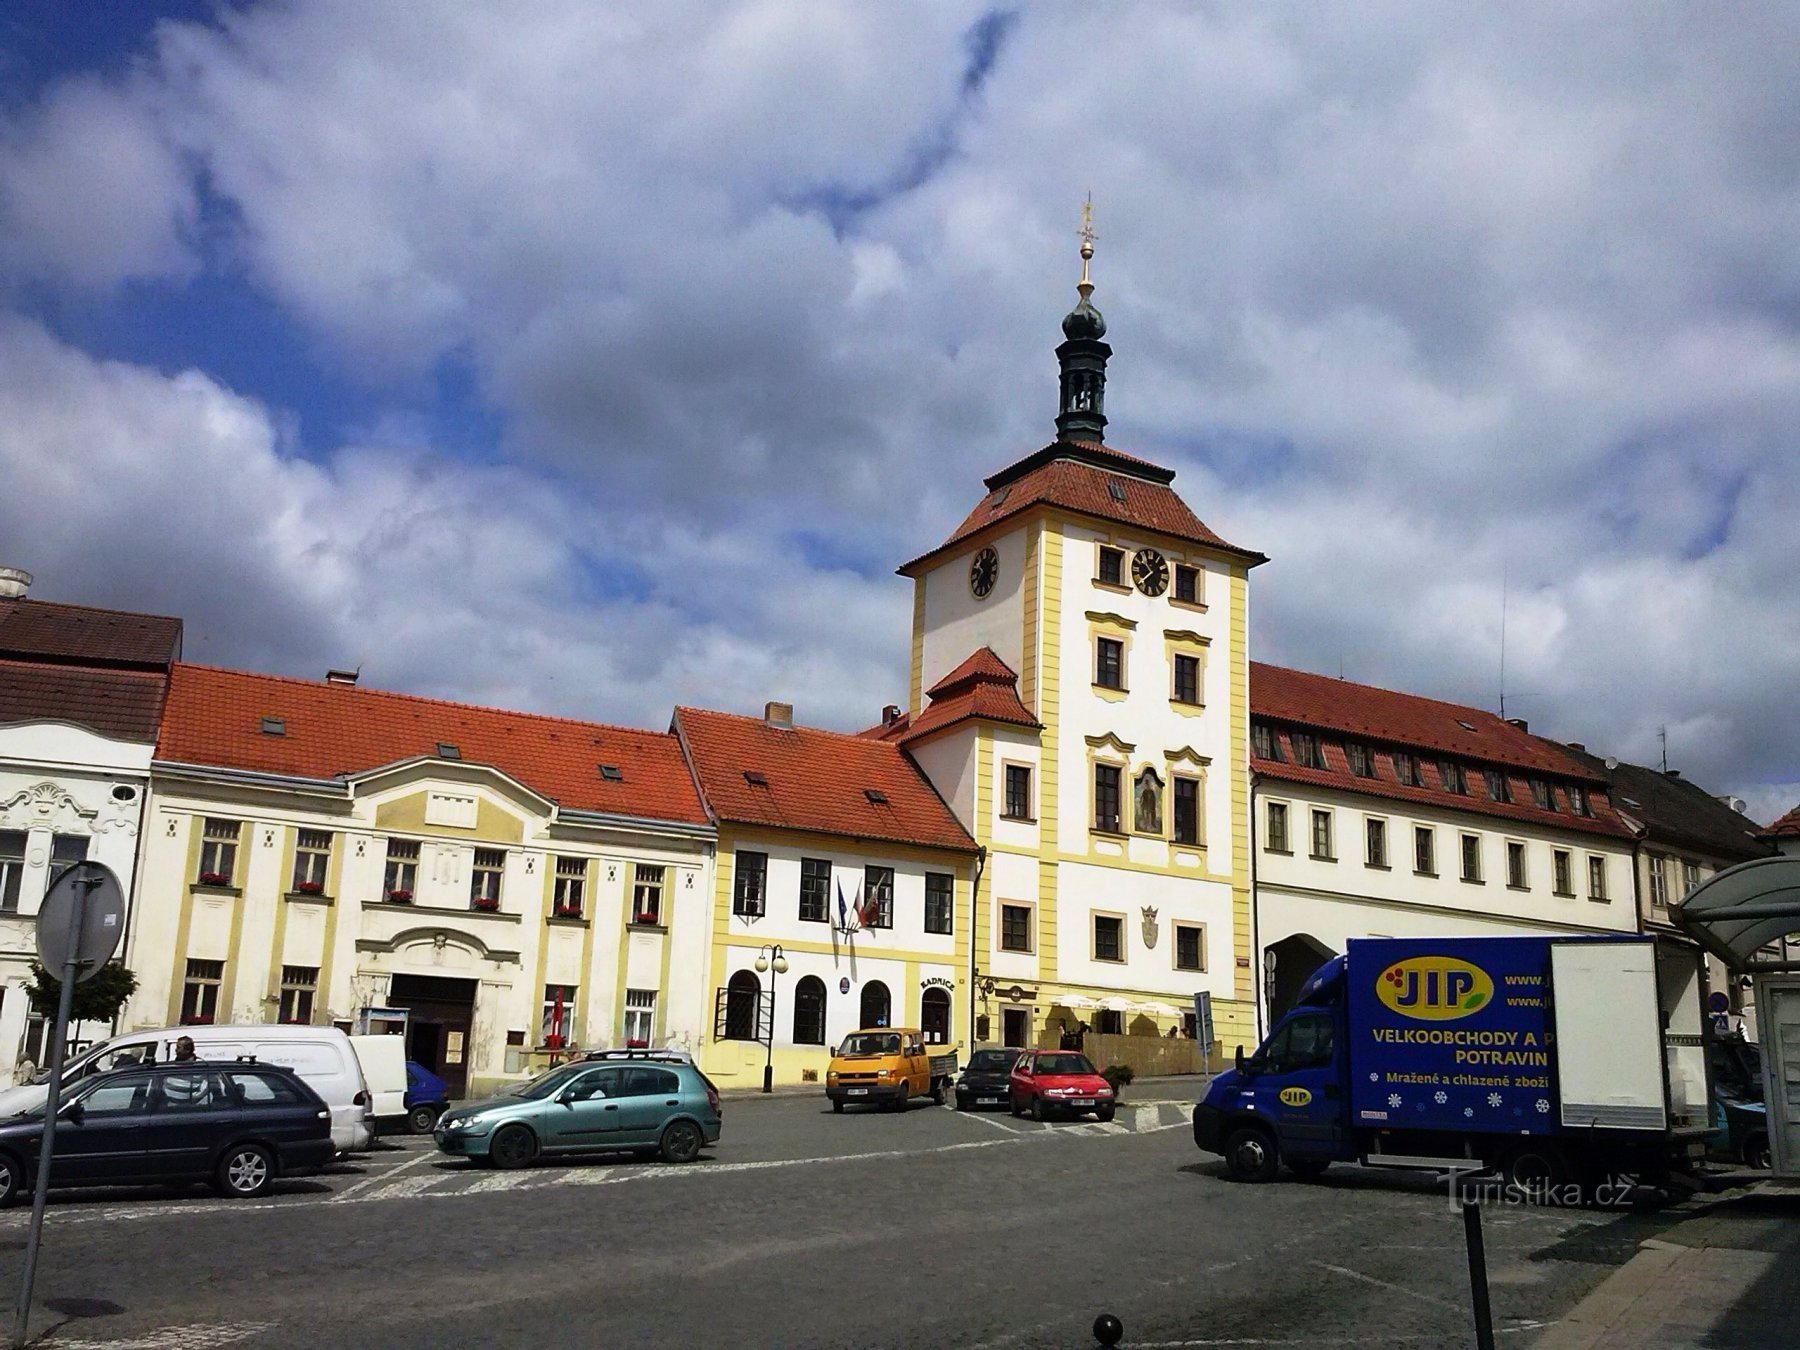 3. Place Masaryk avec la mairie de Jílové